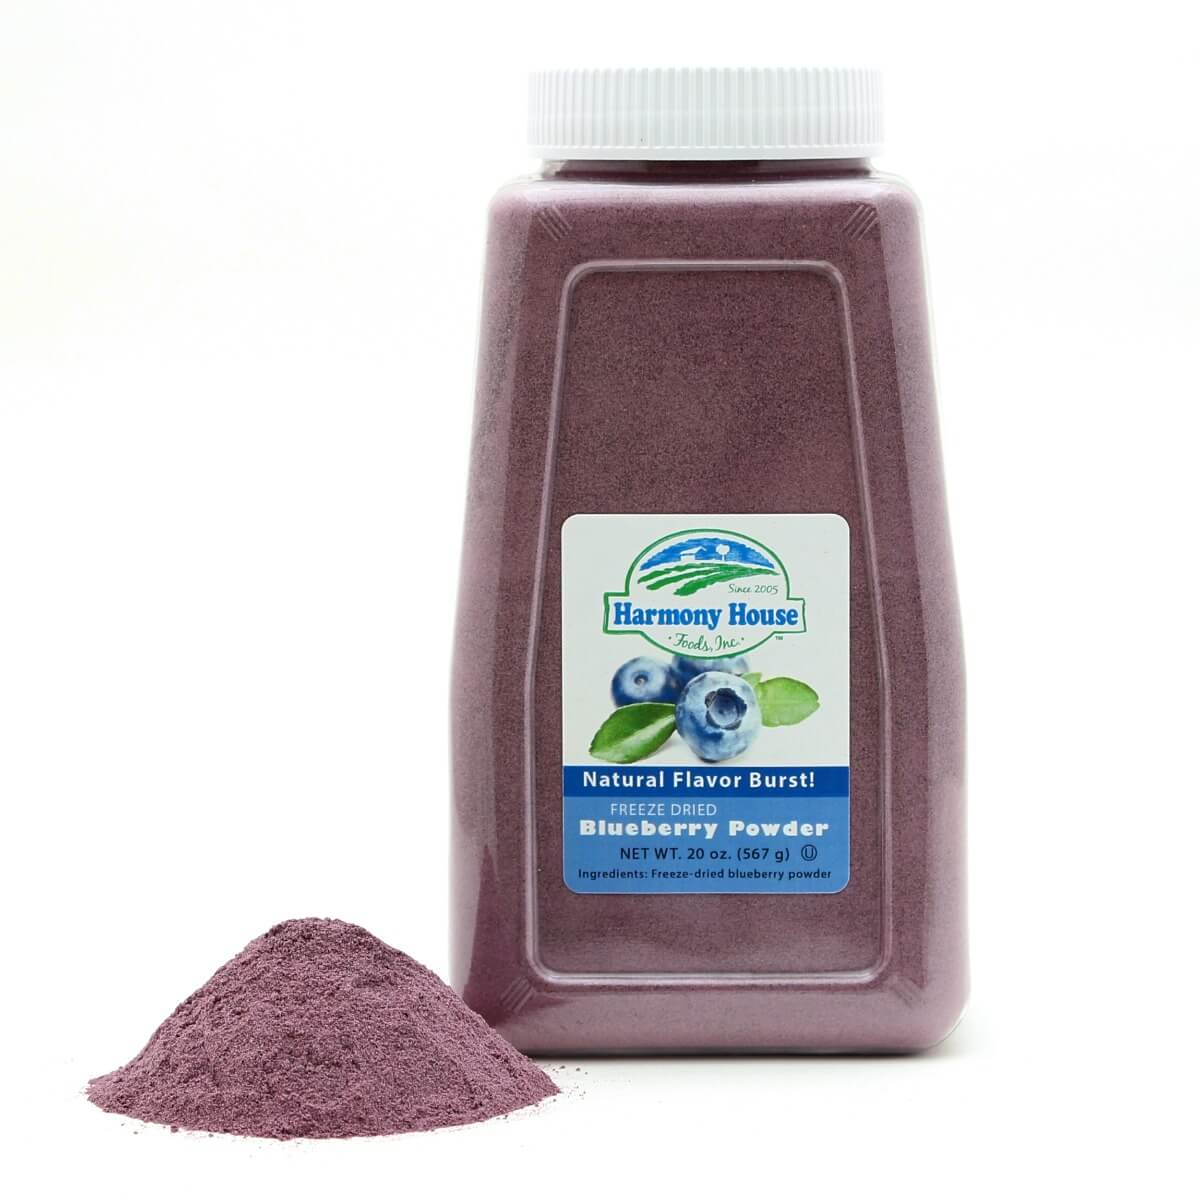 Keywords: blueberry powder